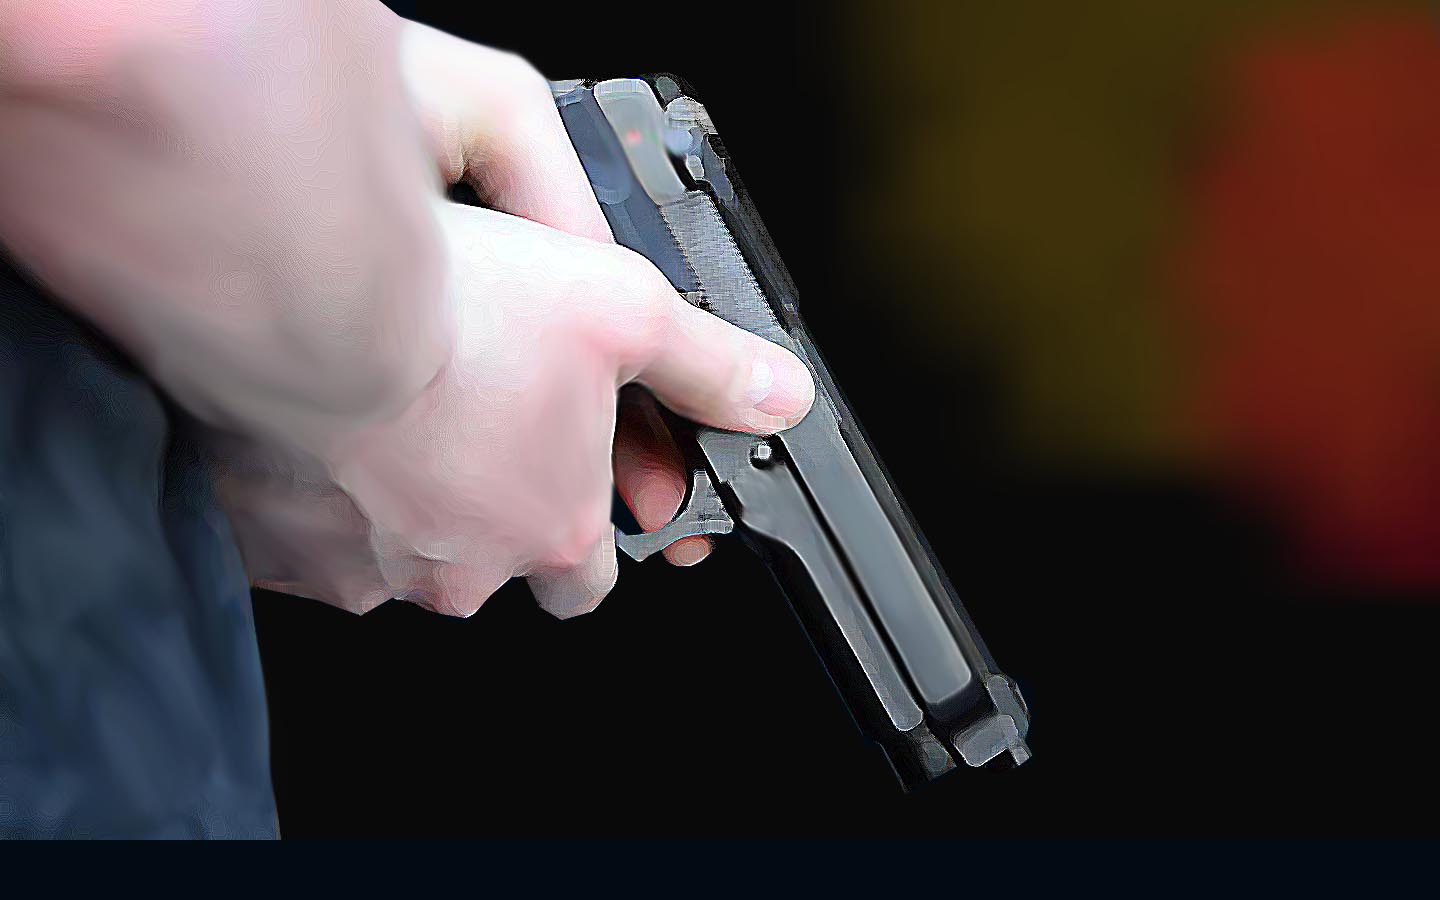 Polisi Pastikan Pistol di Samping Mayat Wanita di Penjaringan Adalah Milik Korban, Sidik Jarinya?